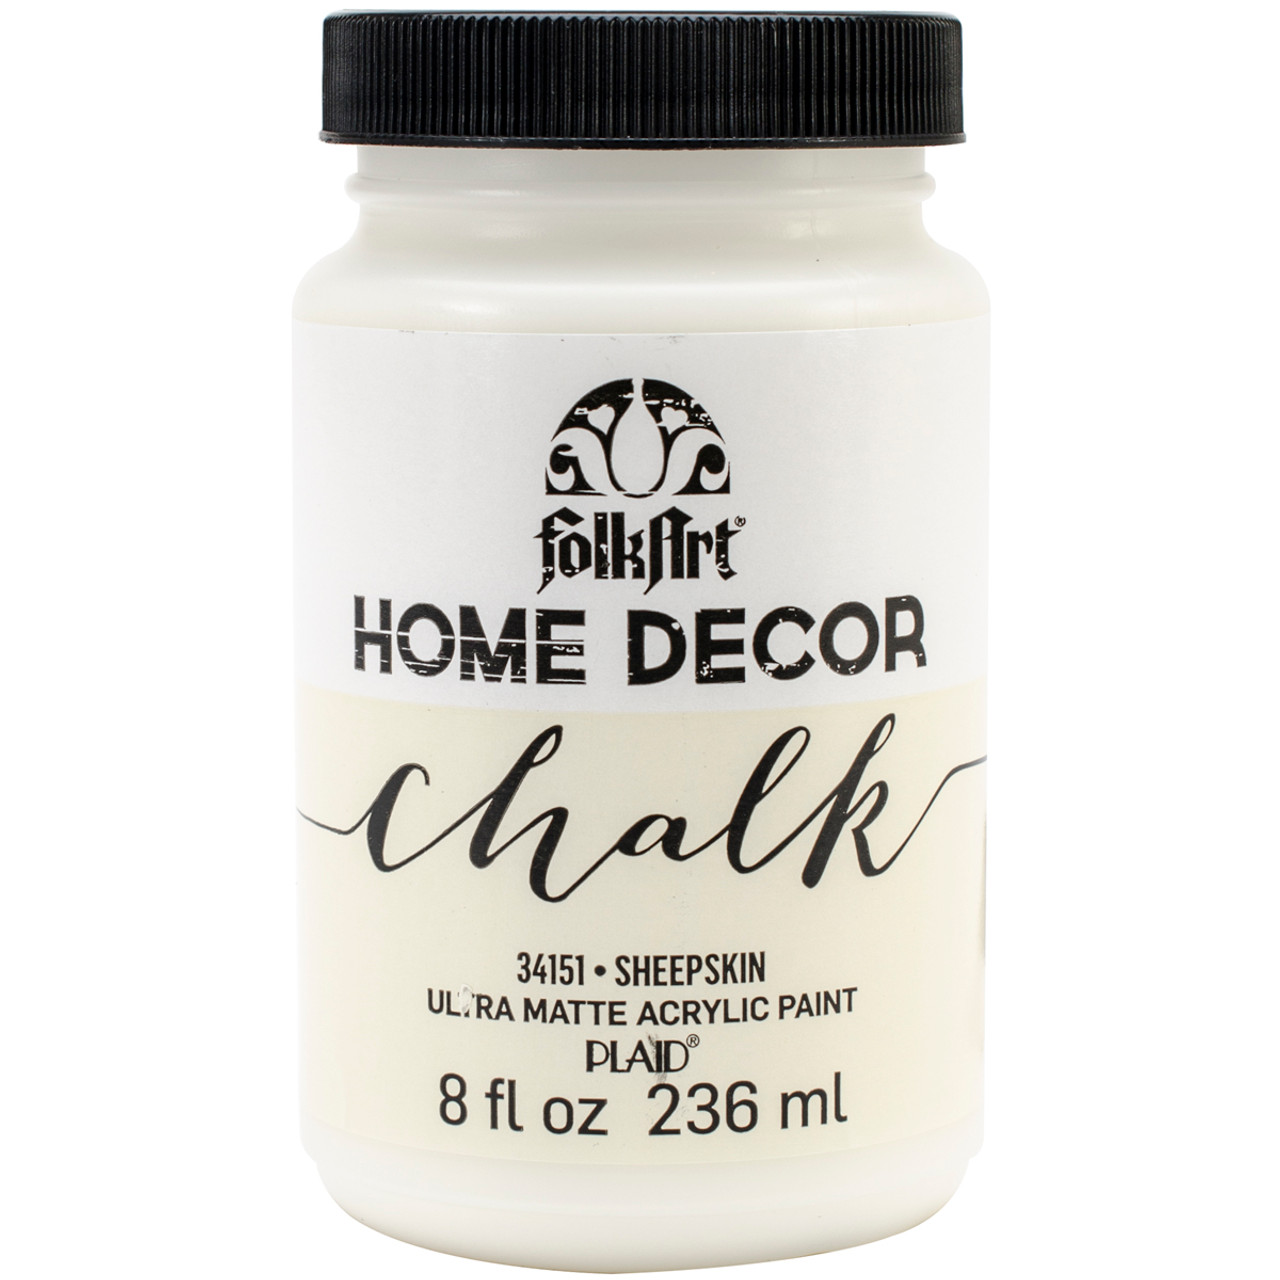 FolkArt Home Decor Chalk Paint, Imperial - 8 fl oz jar